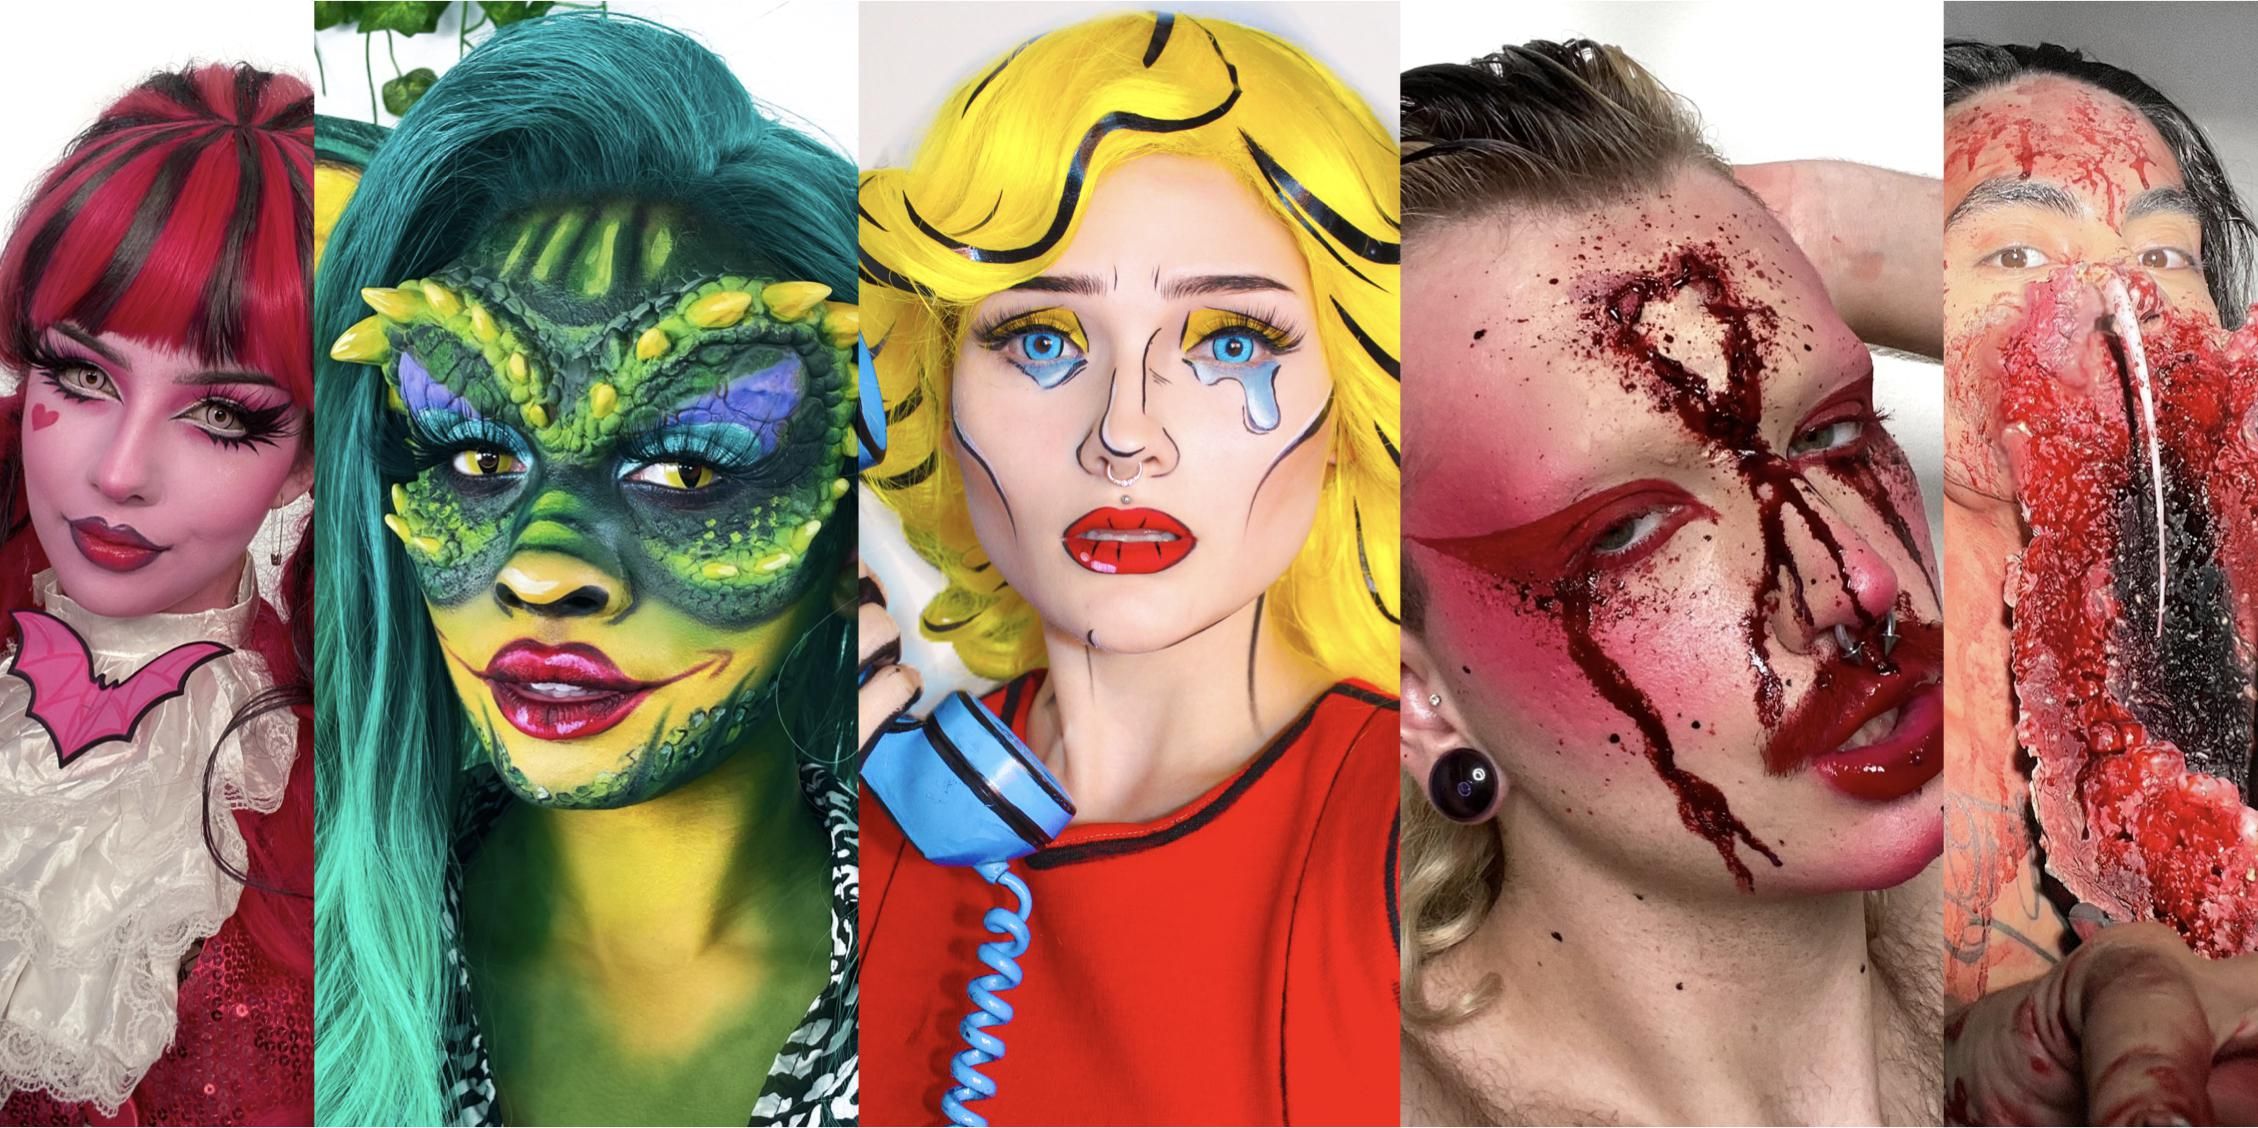 Broken Bone Bloody Wound Dress Up Halloween Costume Makeup Latex Prosthetic 